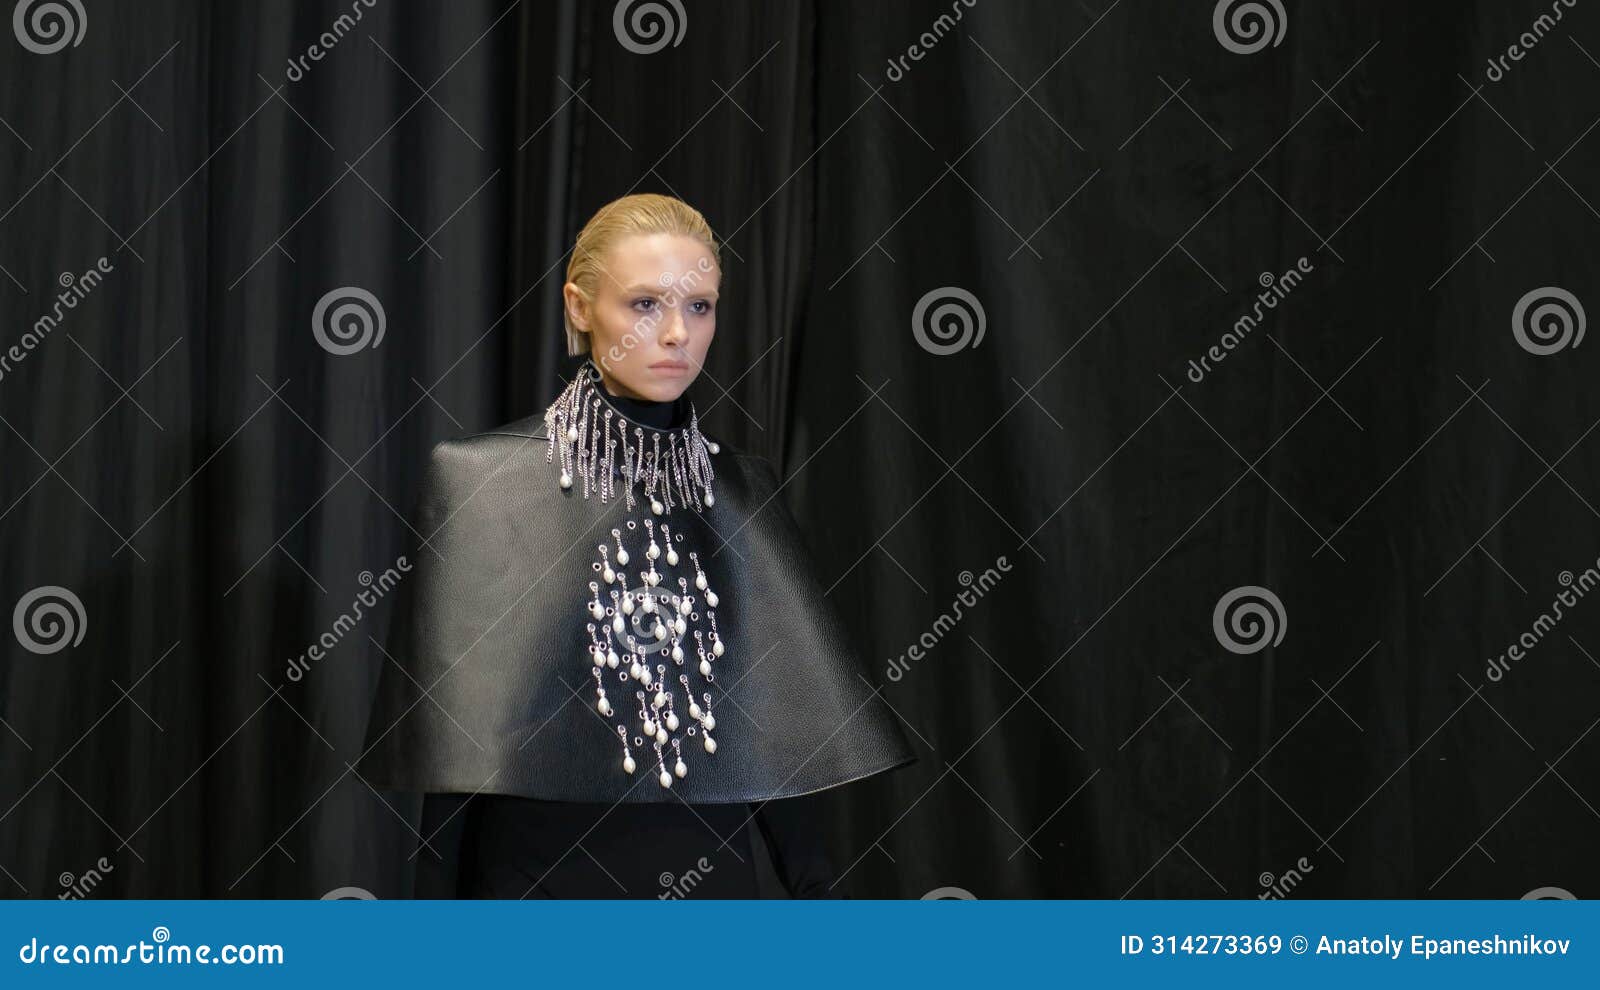 blonde hair model girl moving on catwalk podium. female fashion runway defile.